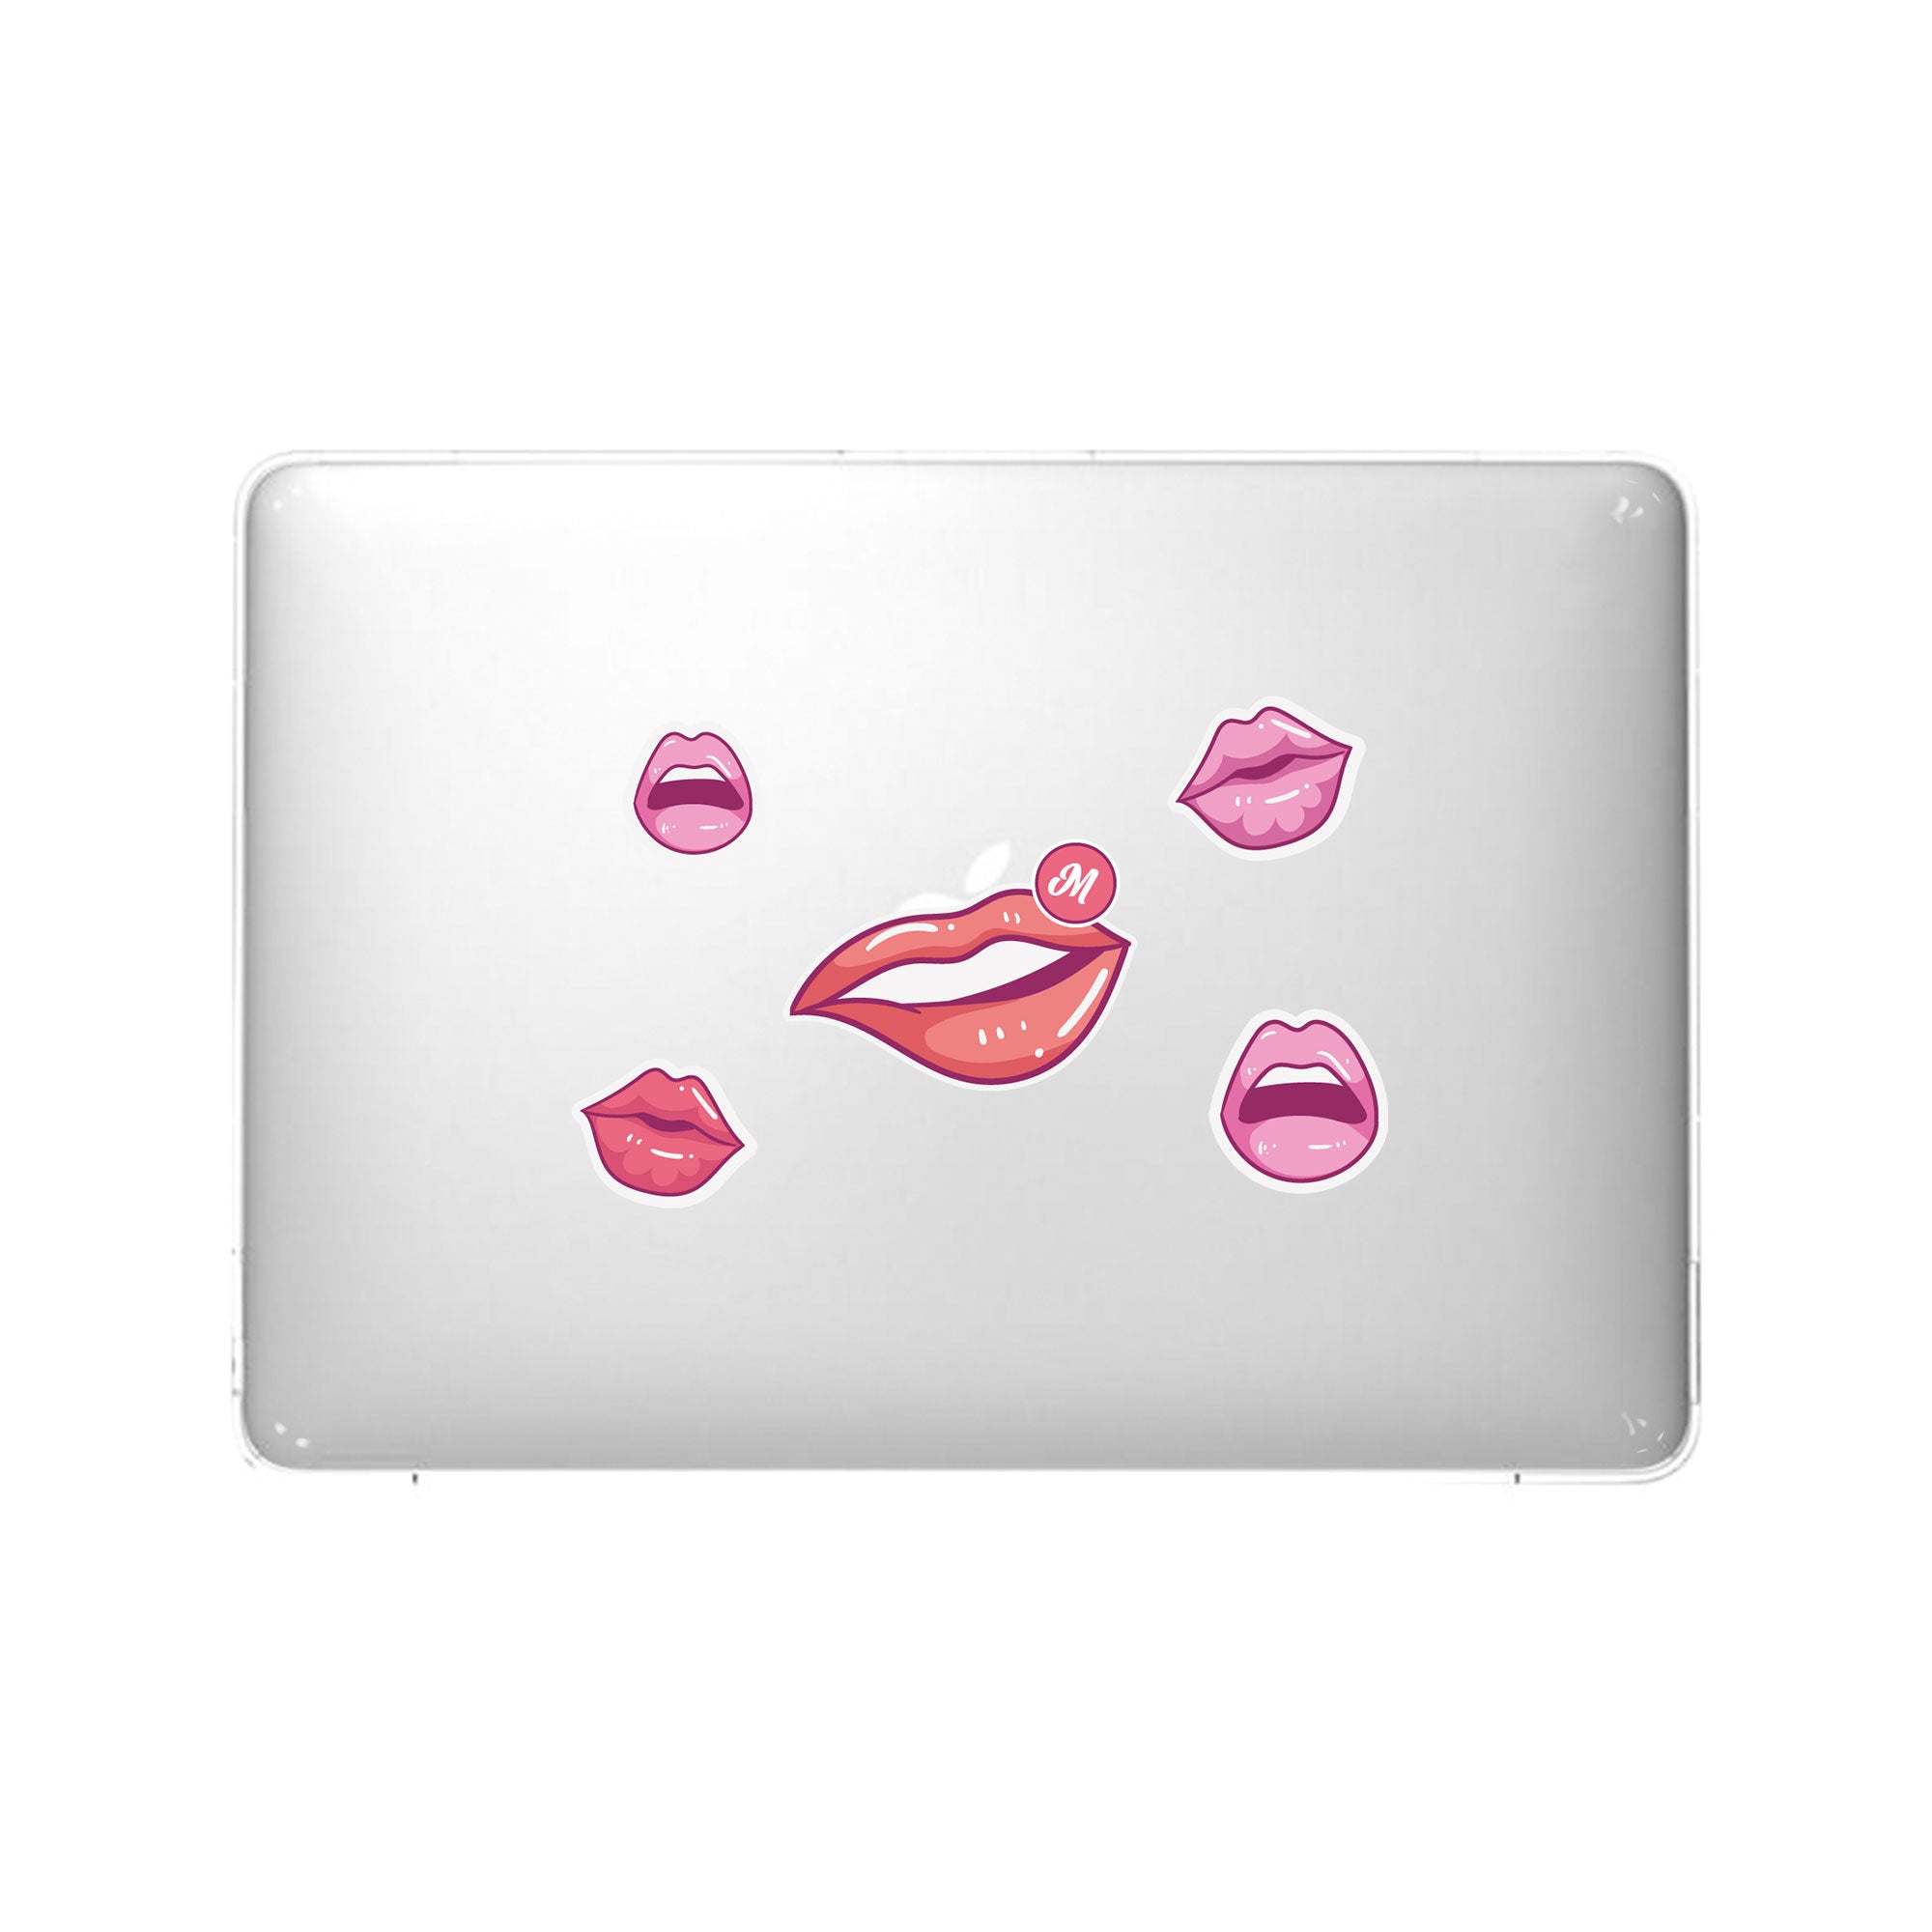 Lips MacBook Case - Mandala Cases 